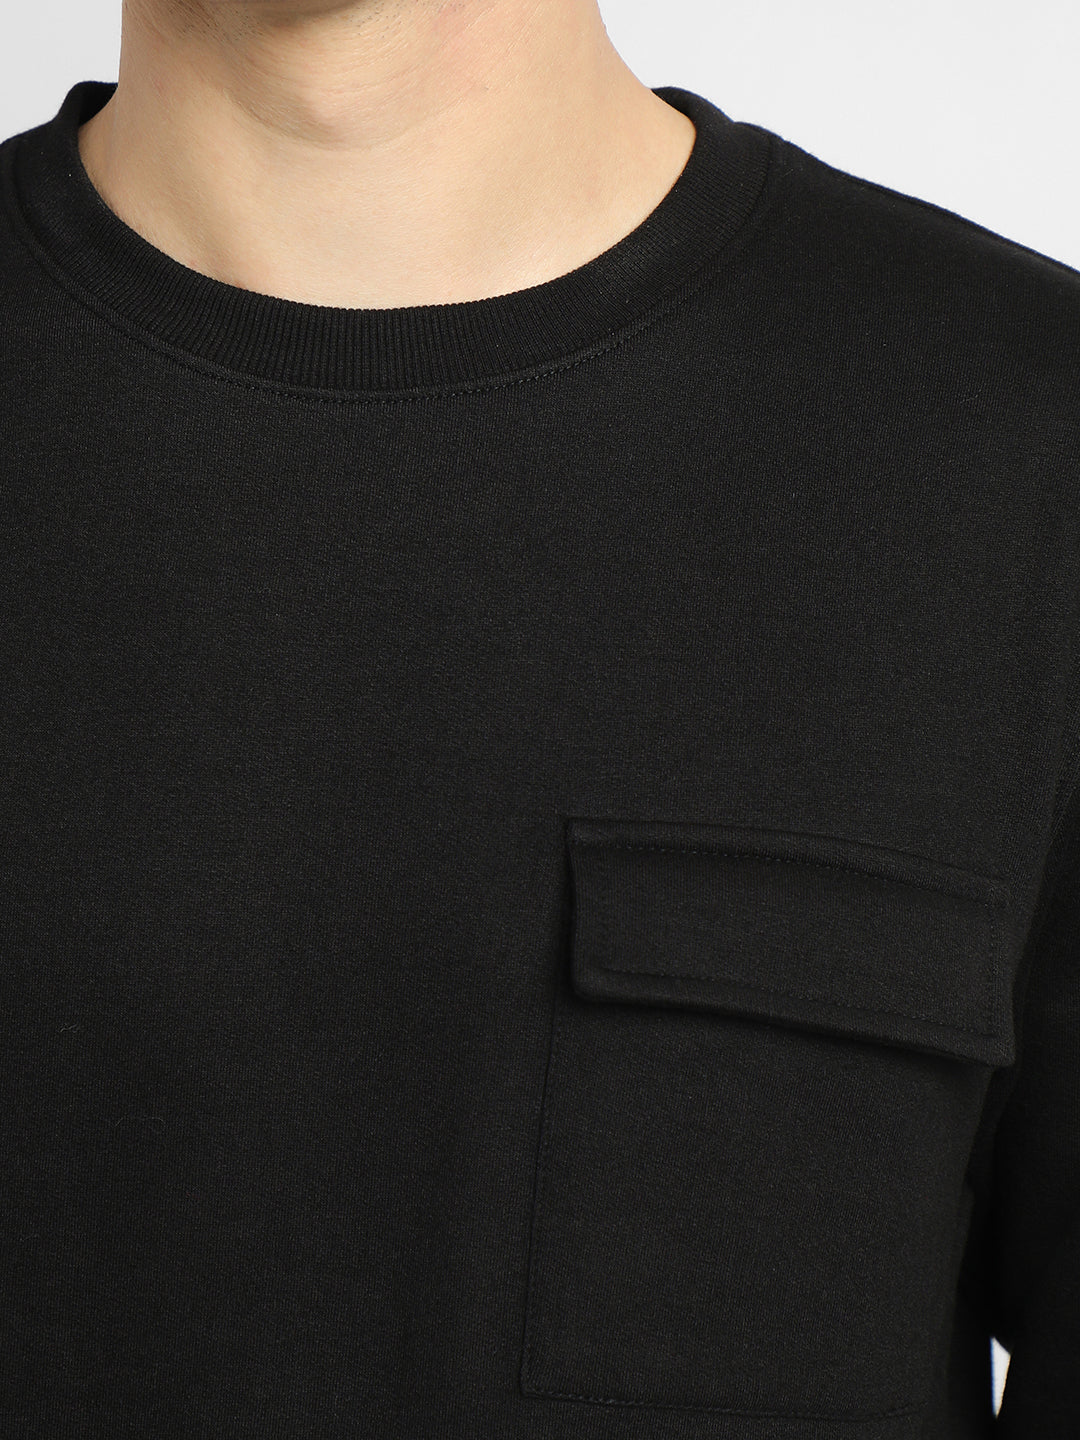 Dennis Lingo Men's Black Mock Neck Full Sleeves Round Neck Sweatshirt